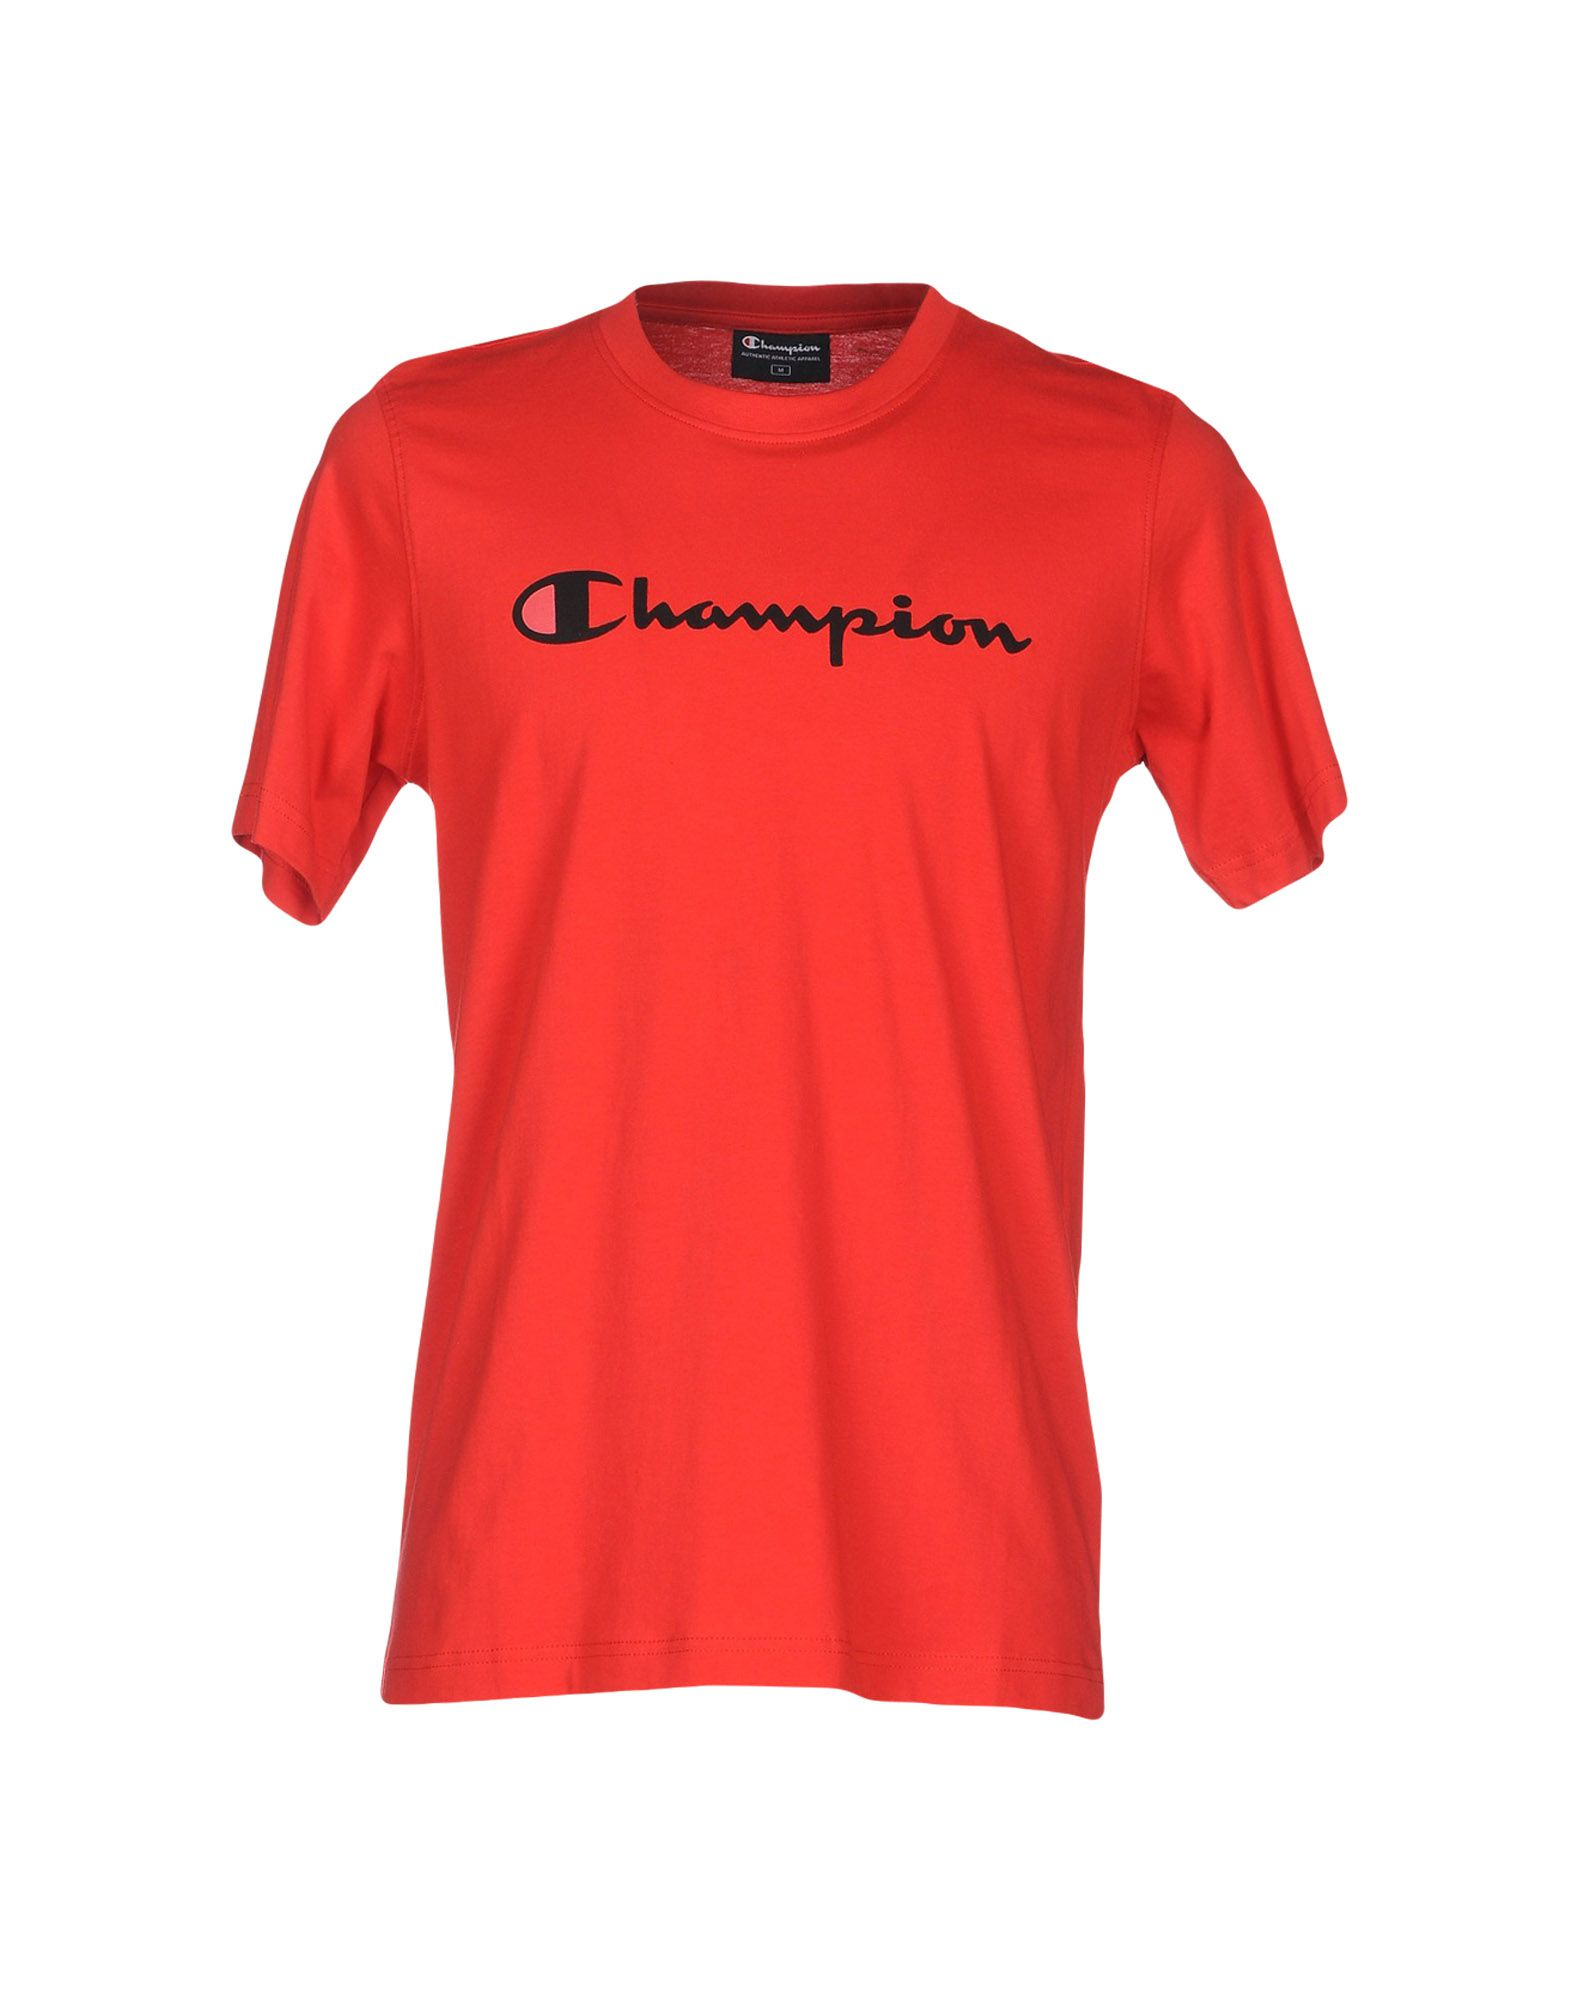 red champion t shirt